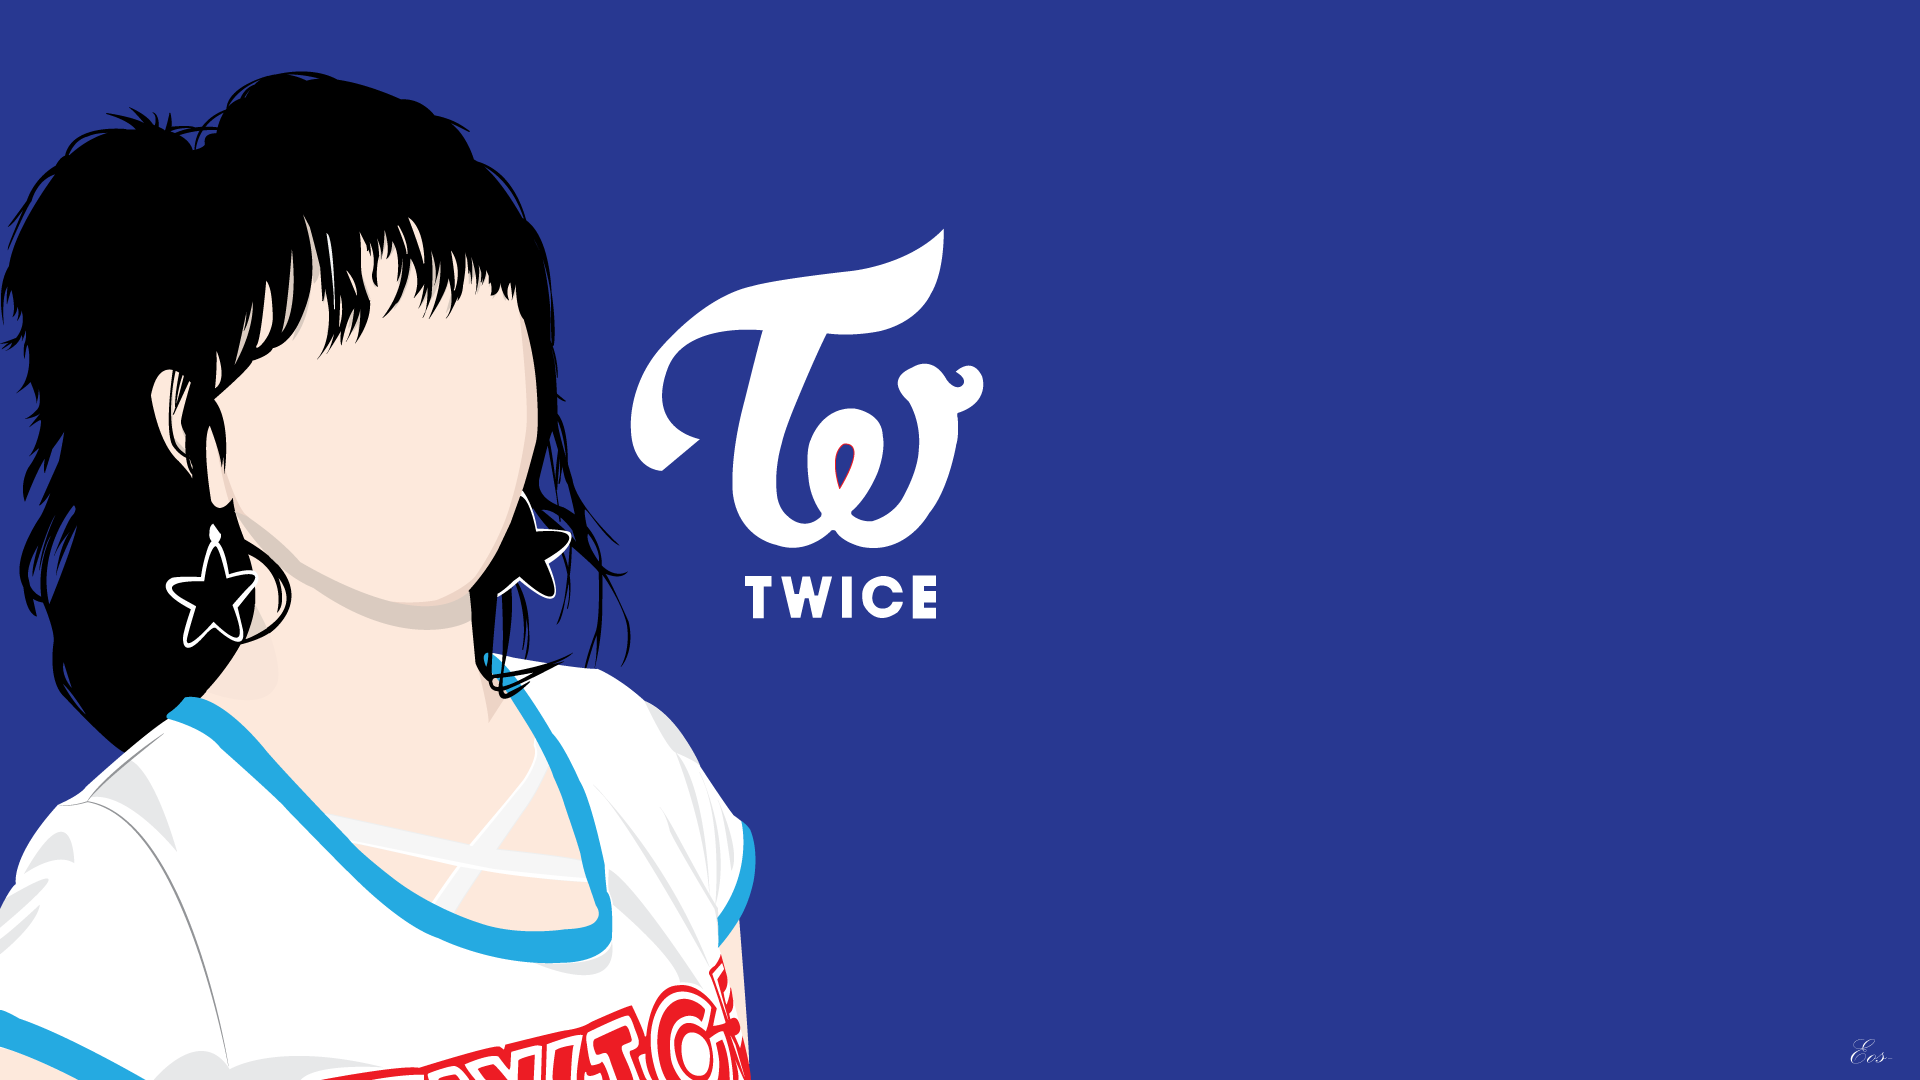 Twice Logo Wallpapers